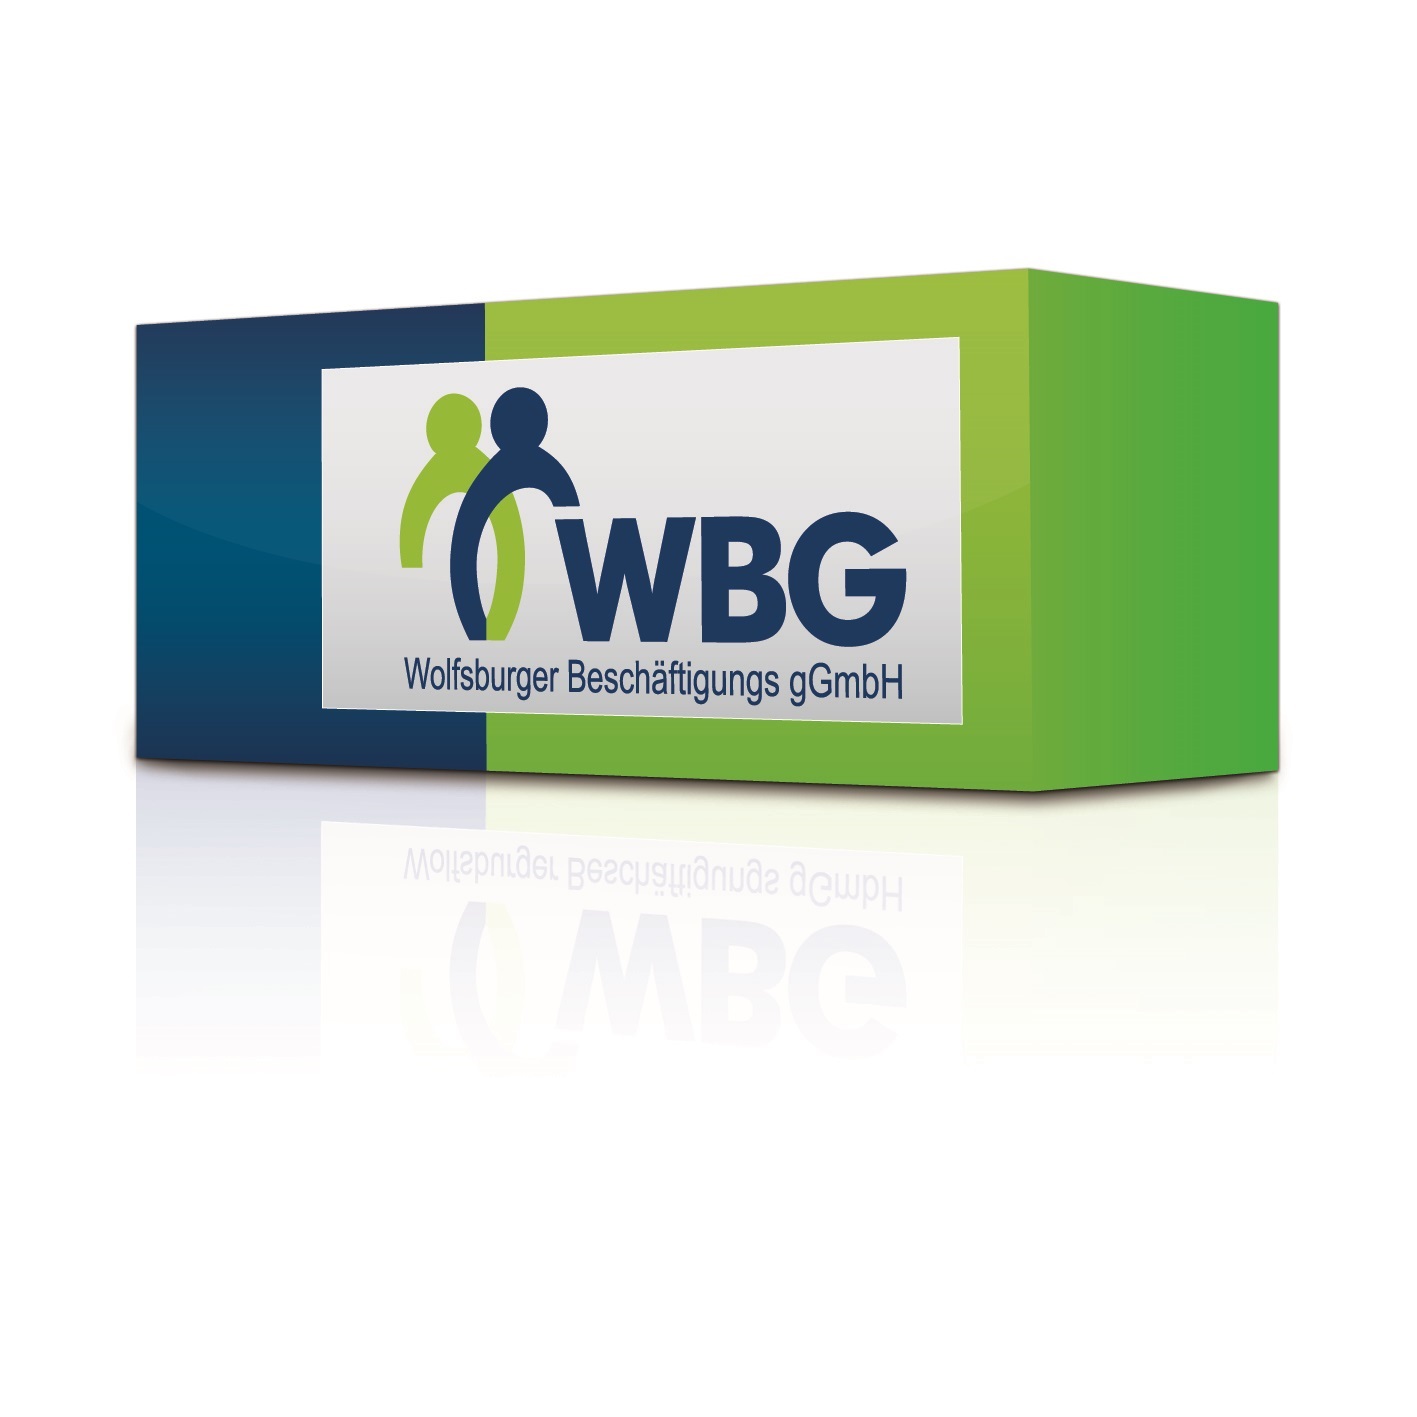 The logo of the WBG